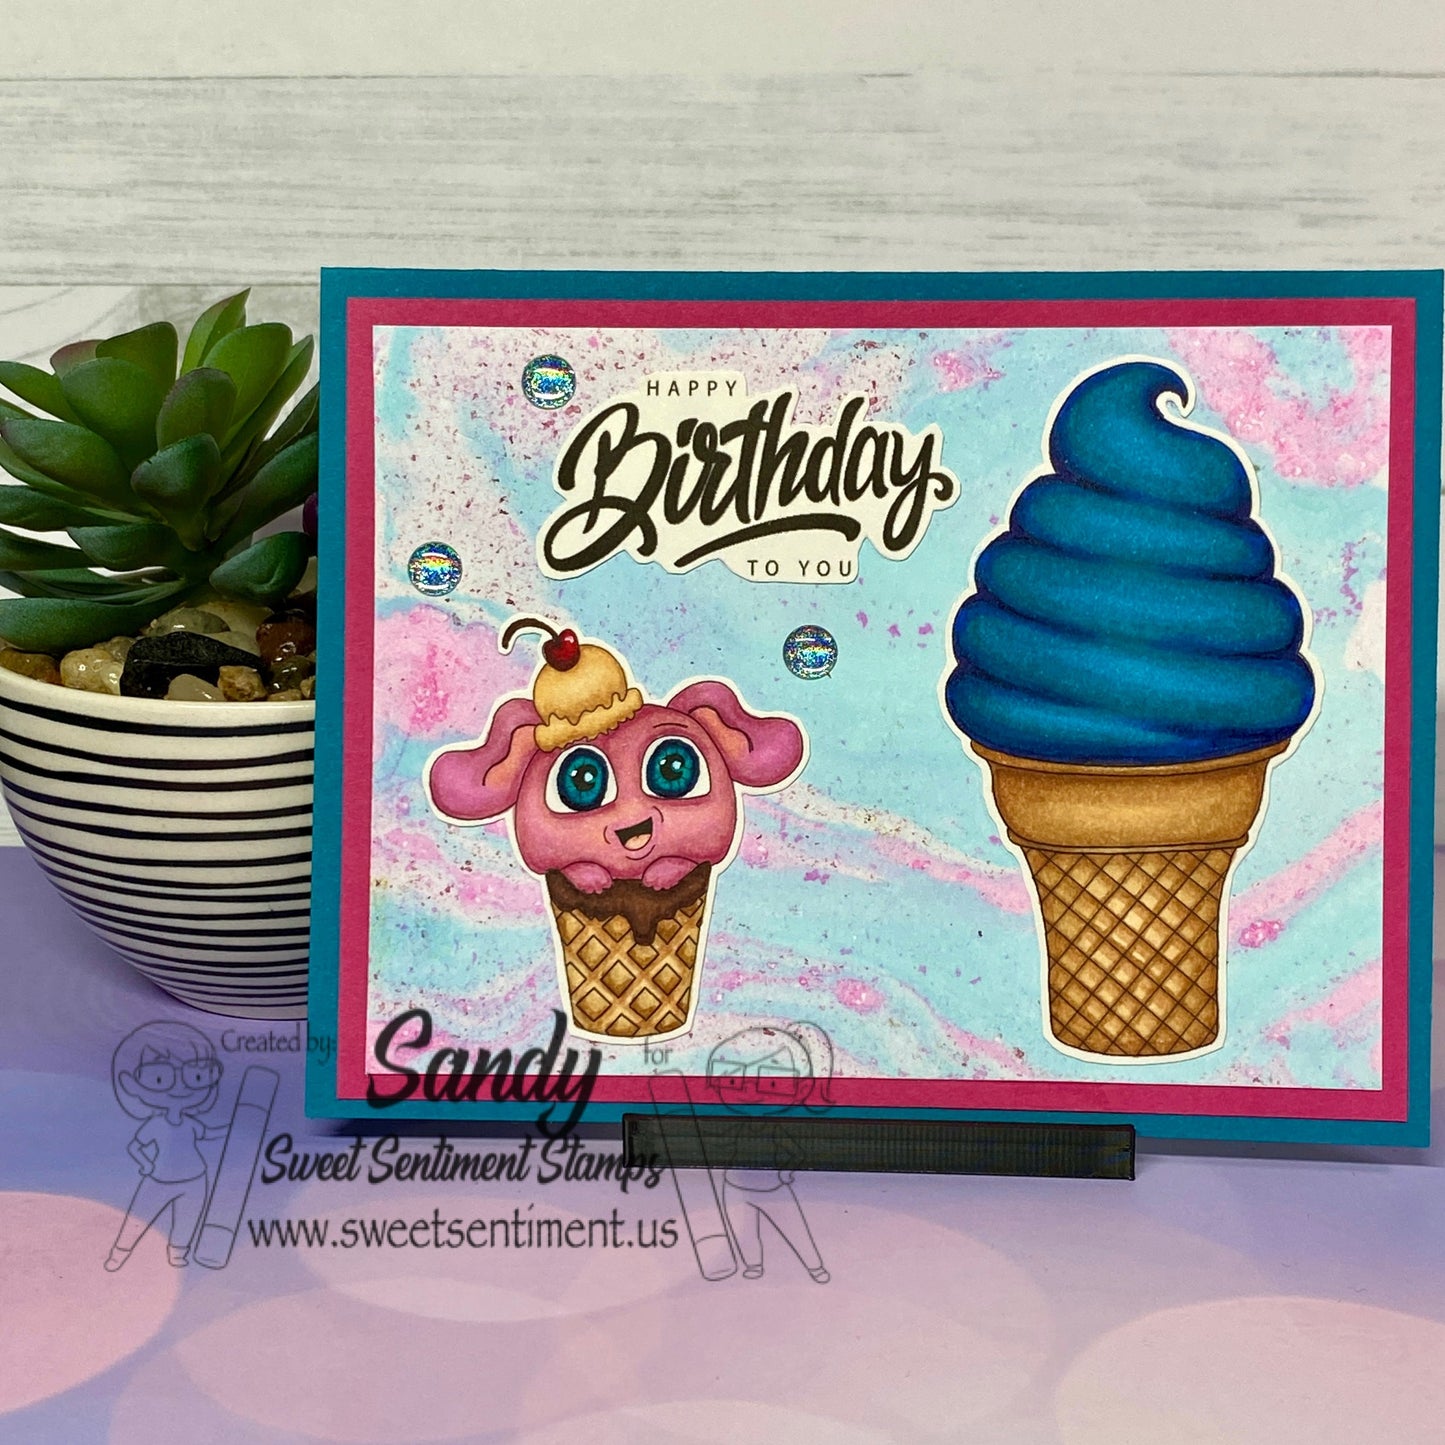 Ice Cream Monsters Stamp Set